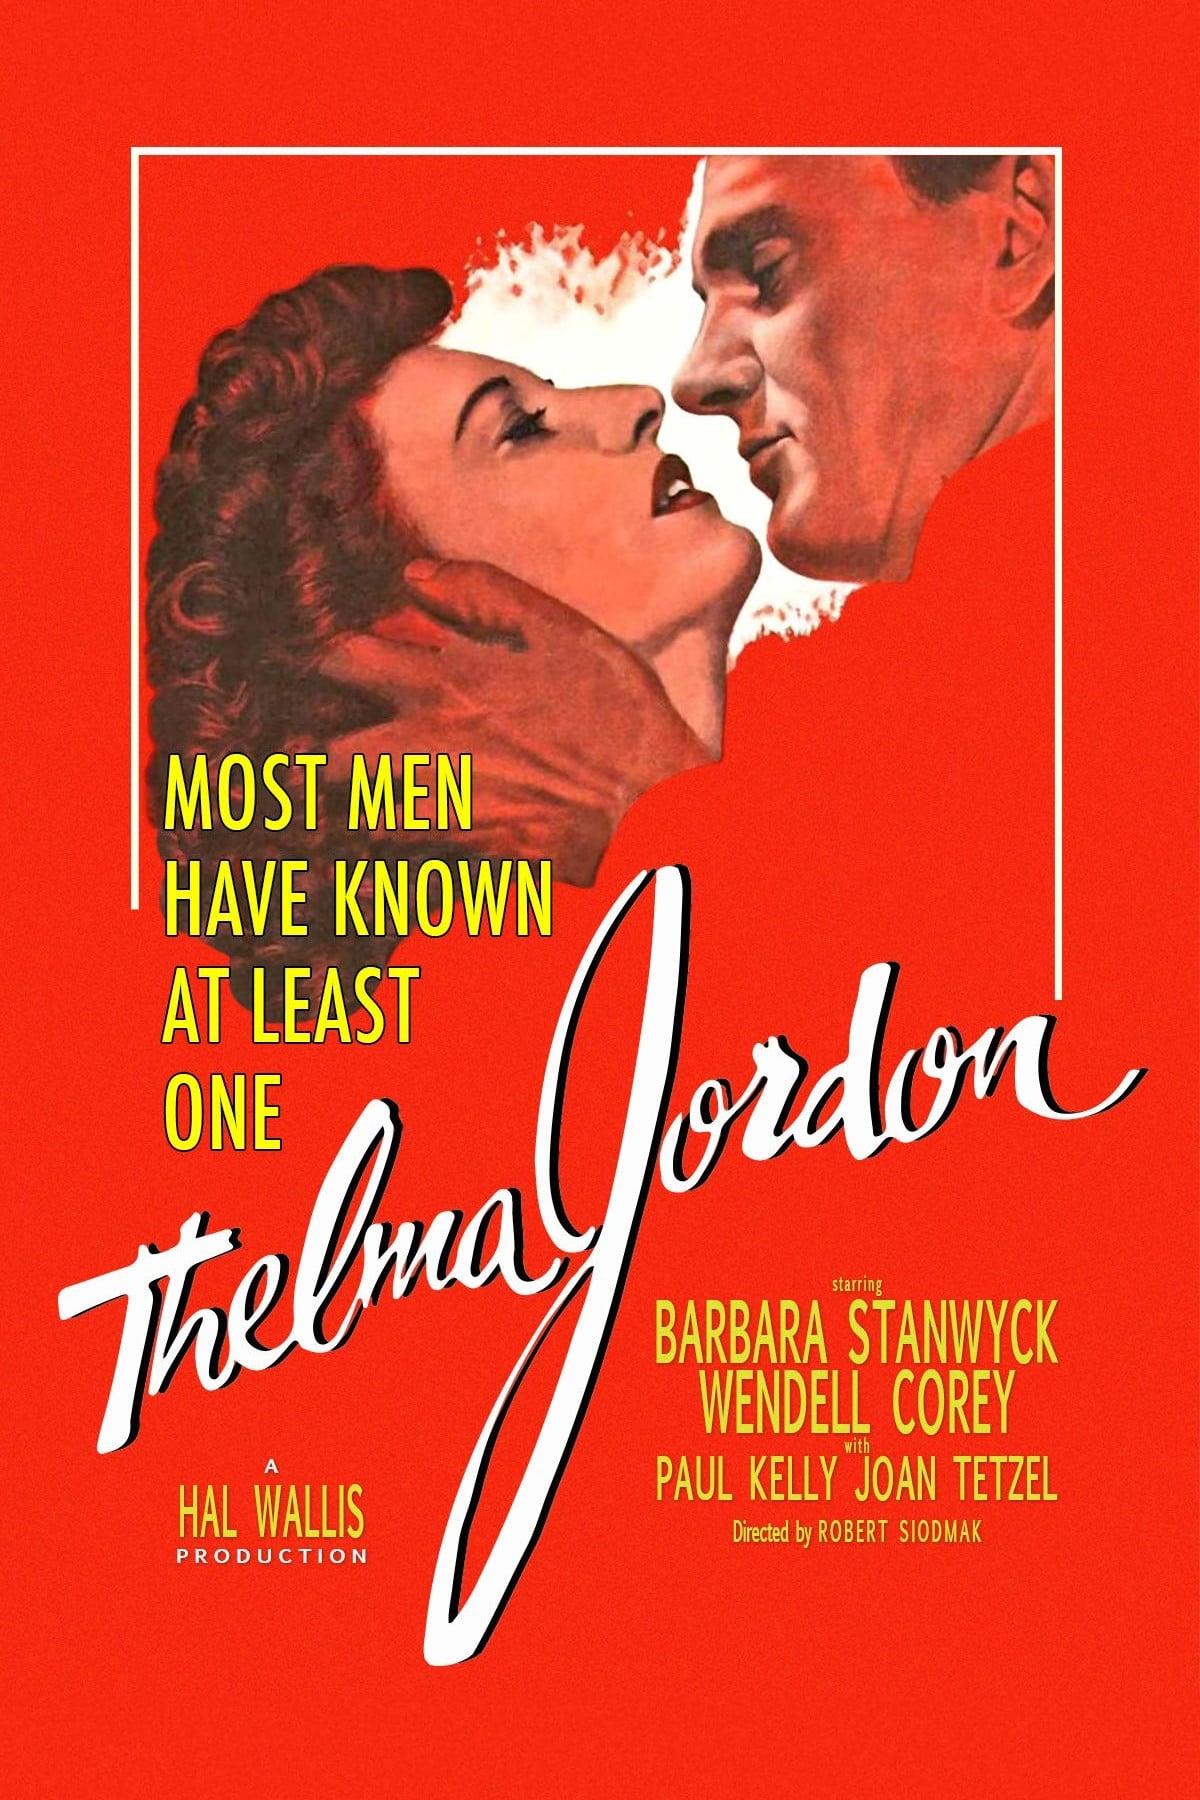 The File on Thelma Jordon poster